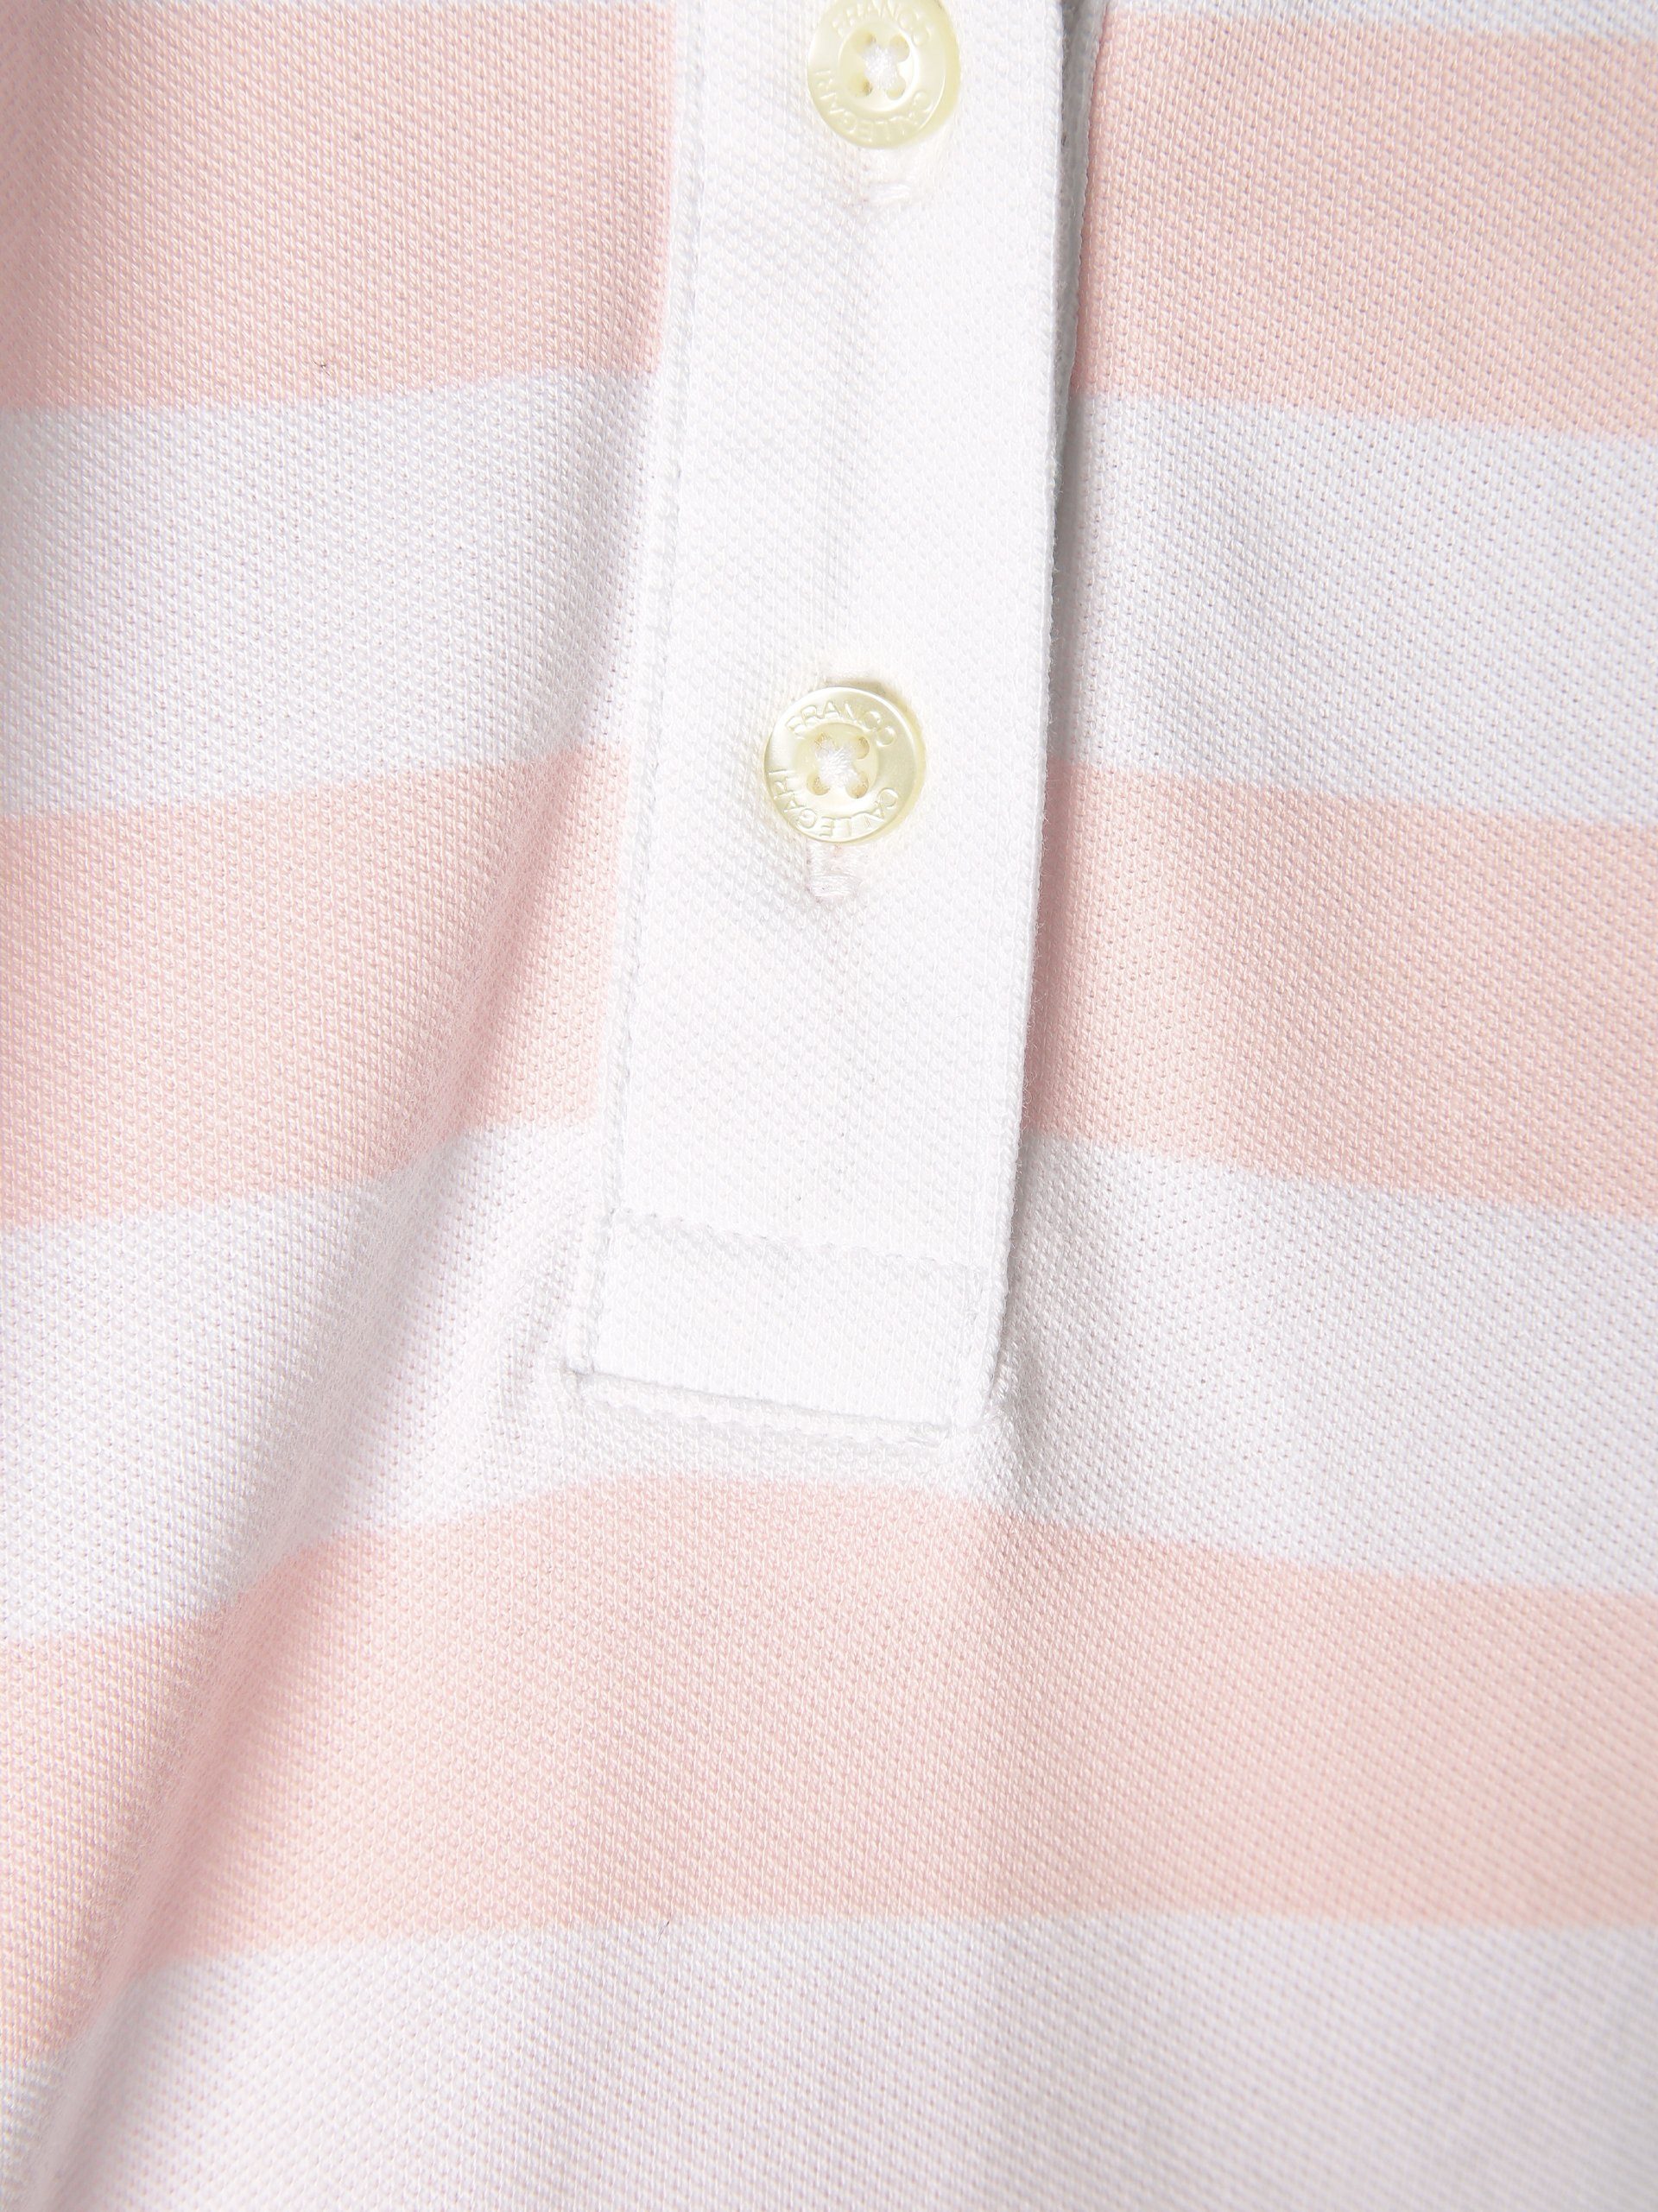 Callegari Poloshirt rosa Franco weiß